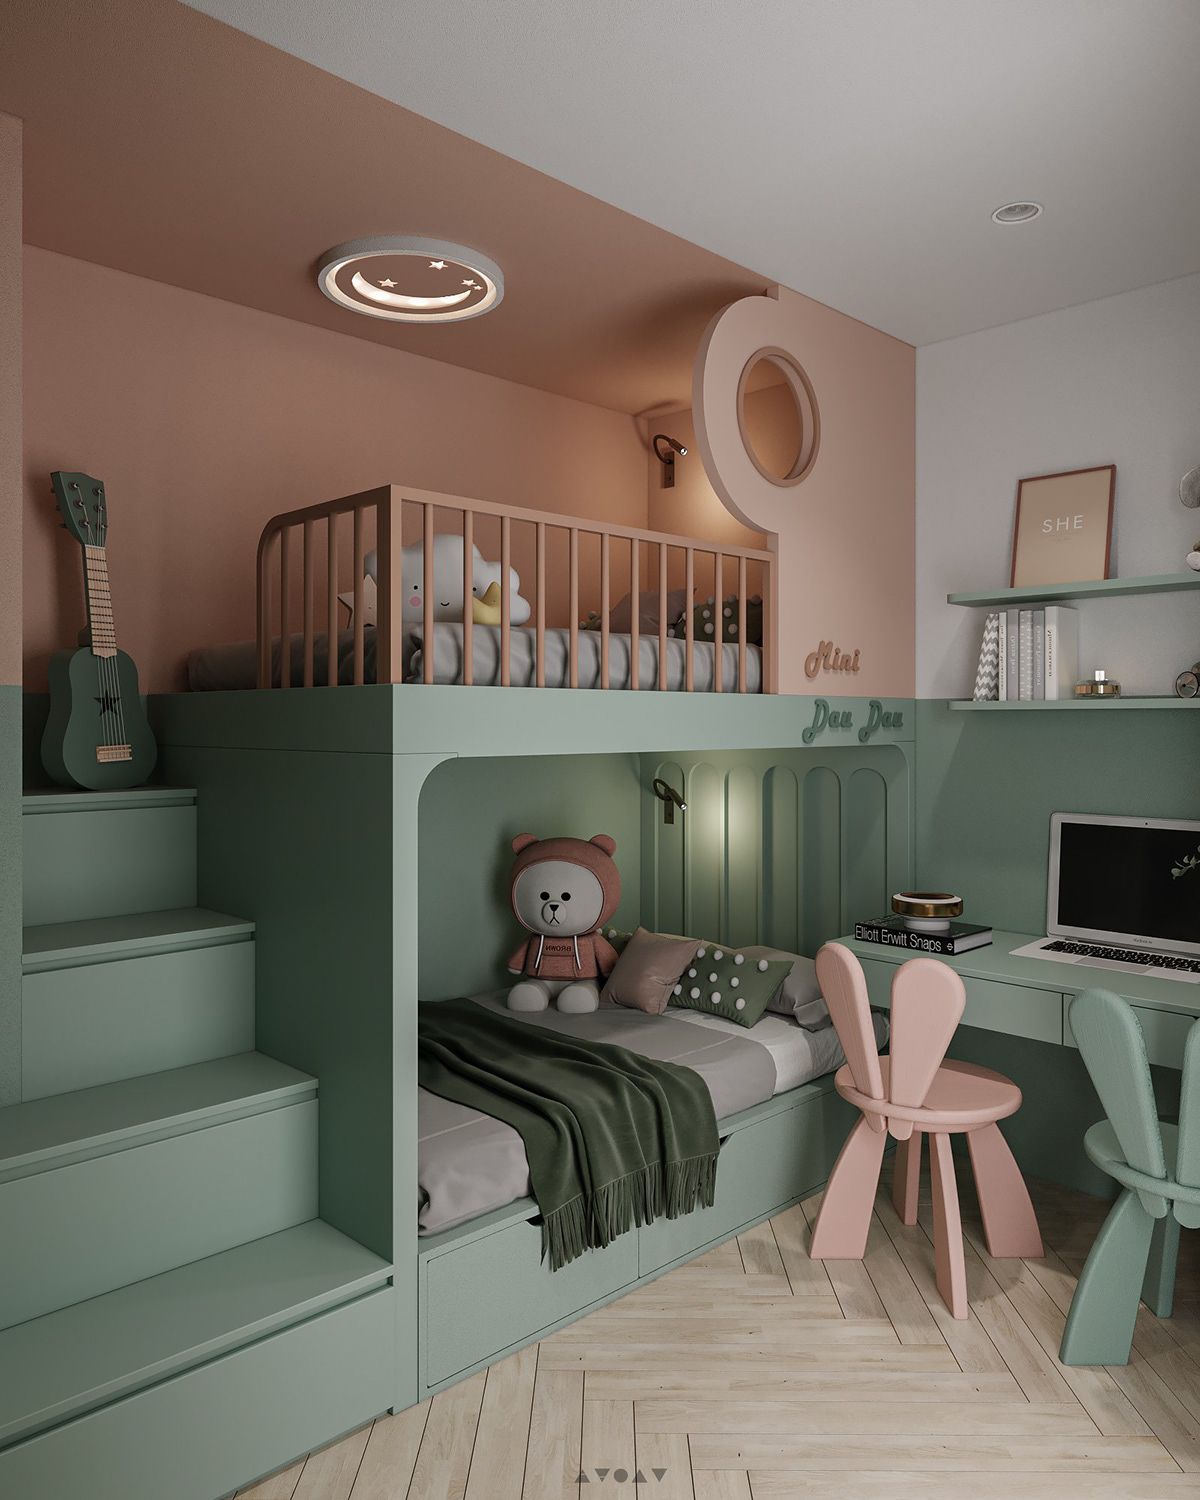 How to Choose Children Bedroom Furniture